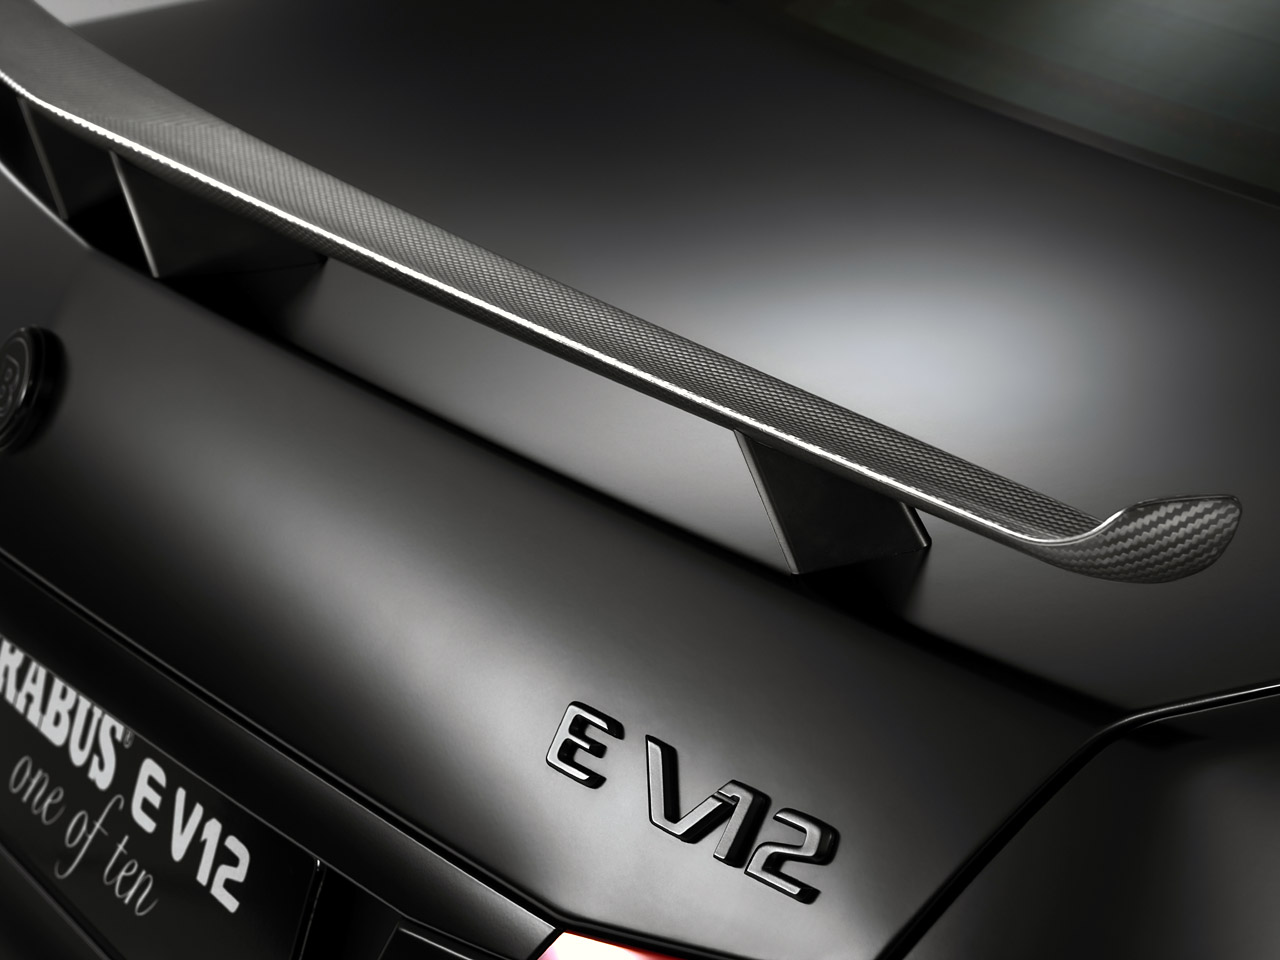 2010 Brabus E V12